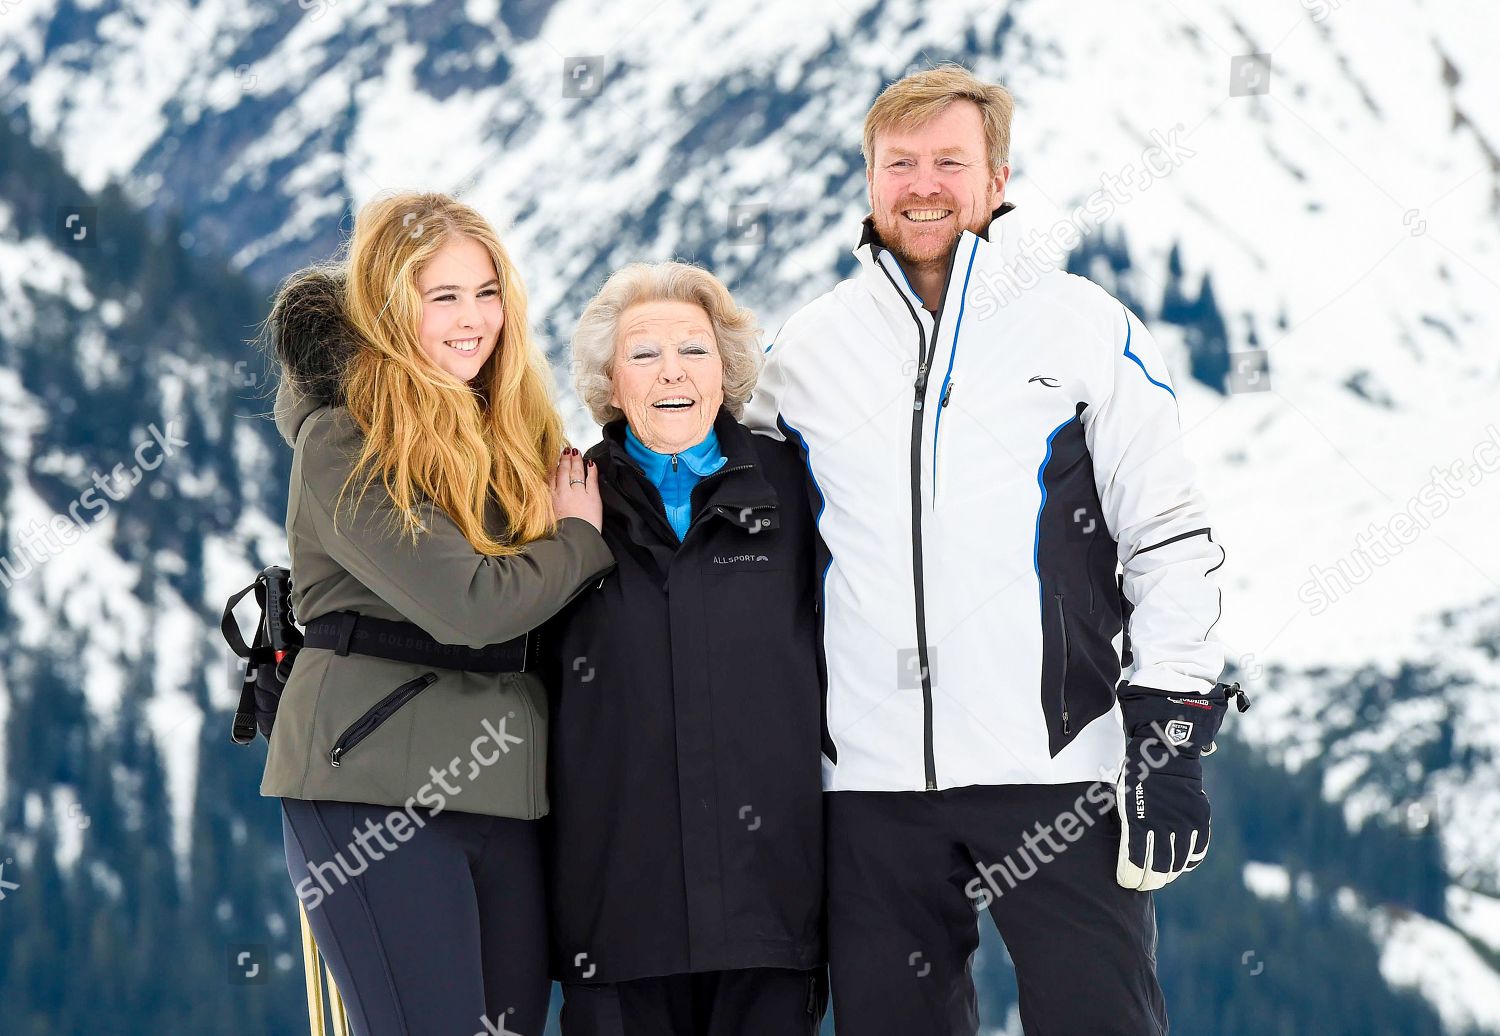 dutch-royal-family-winter-holiday-photocall-lech-austria-shutterstock-editorial-10566567f.jpg